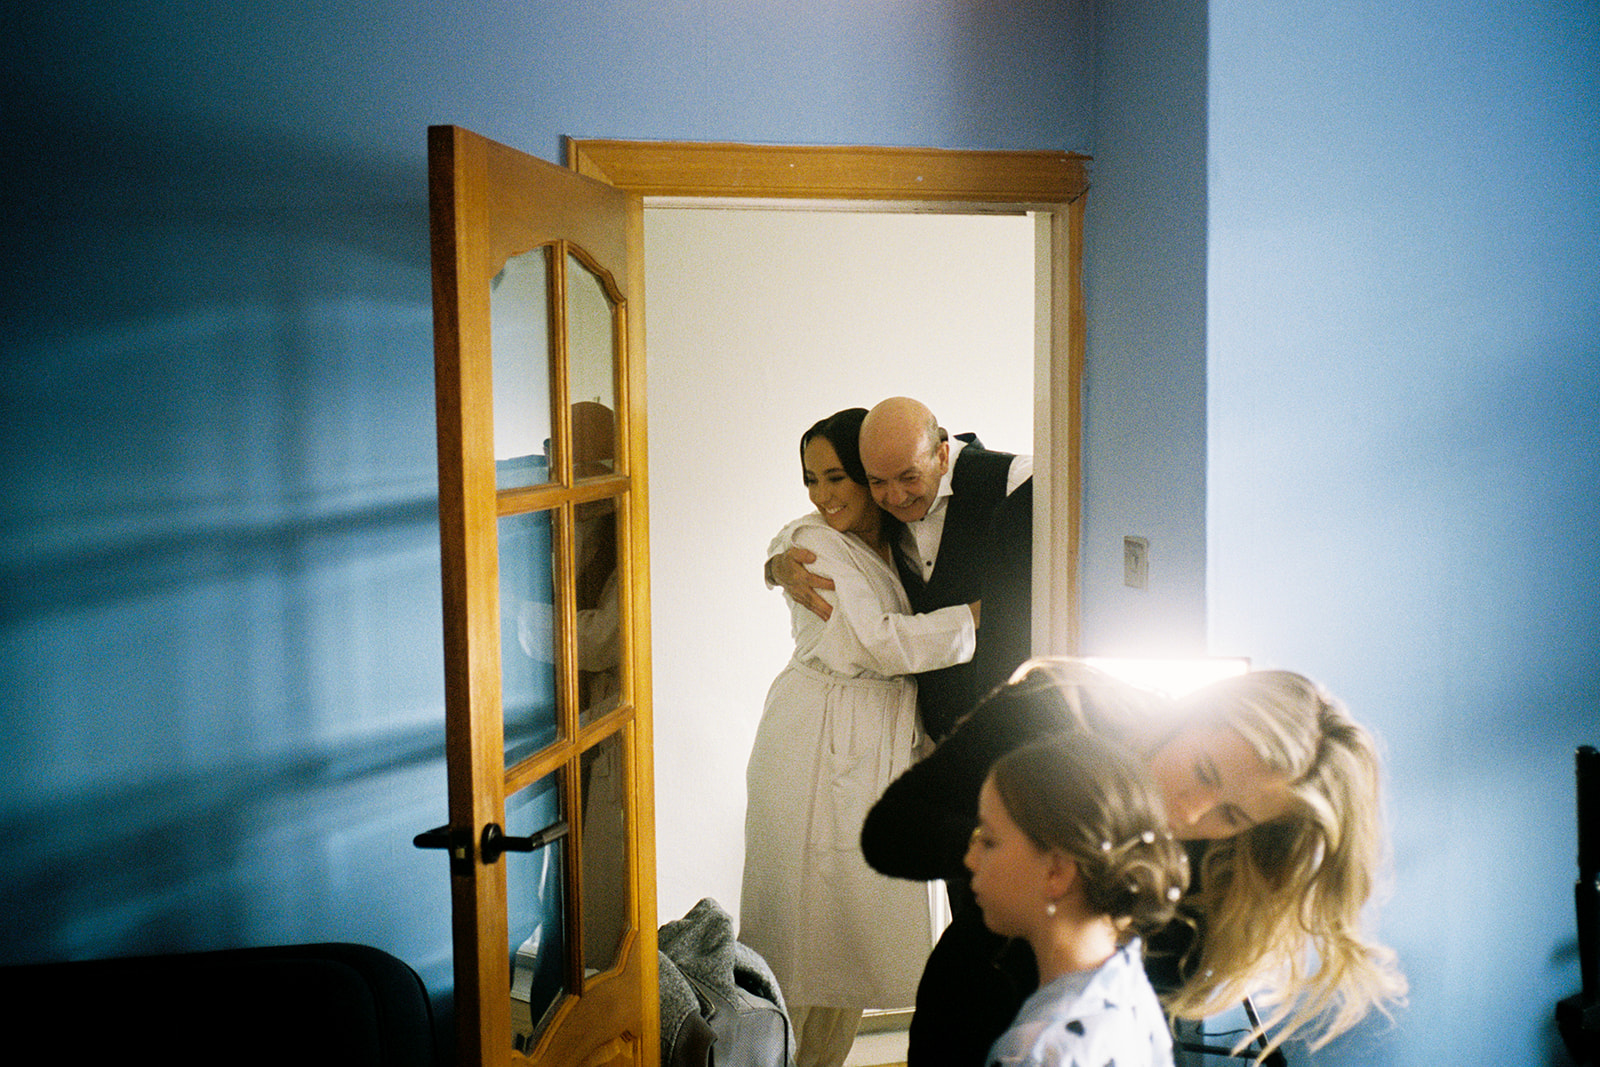 uk wedding 35mm film photographer